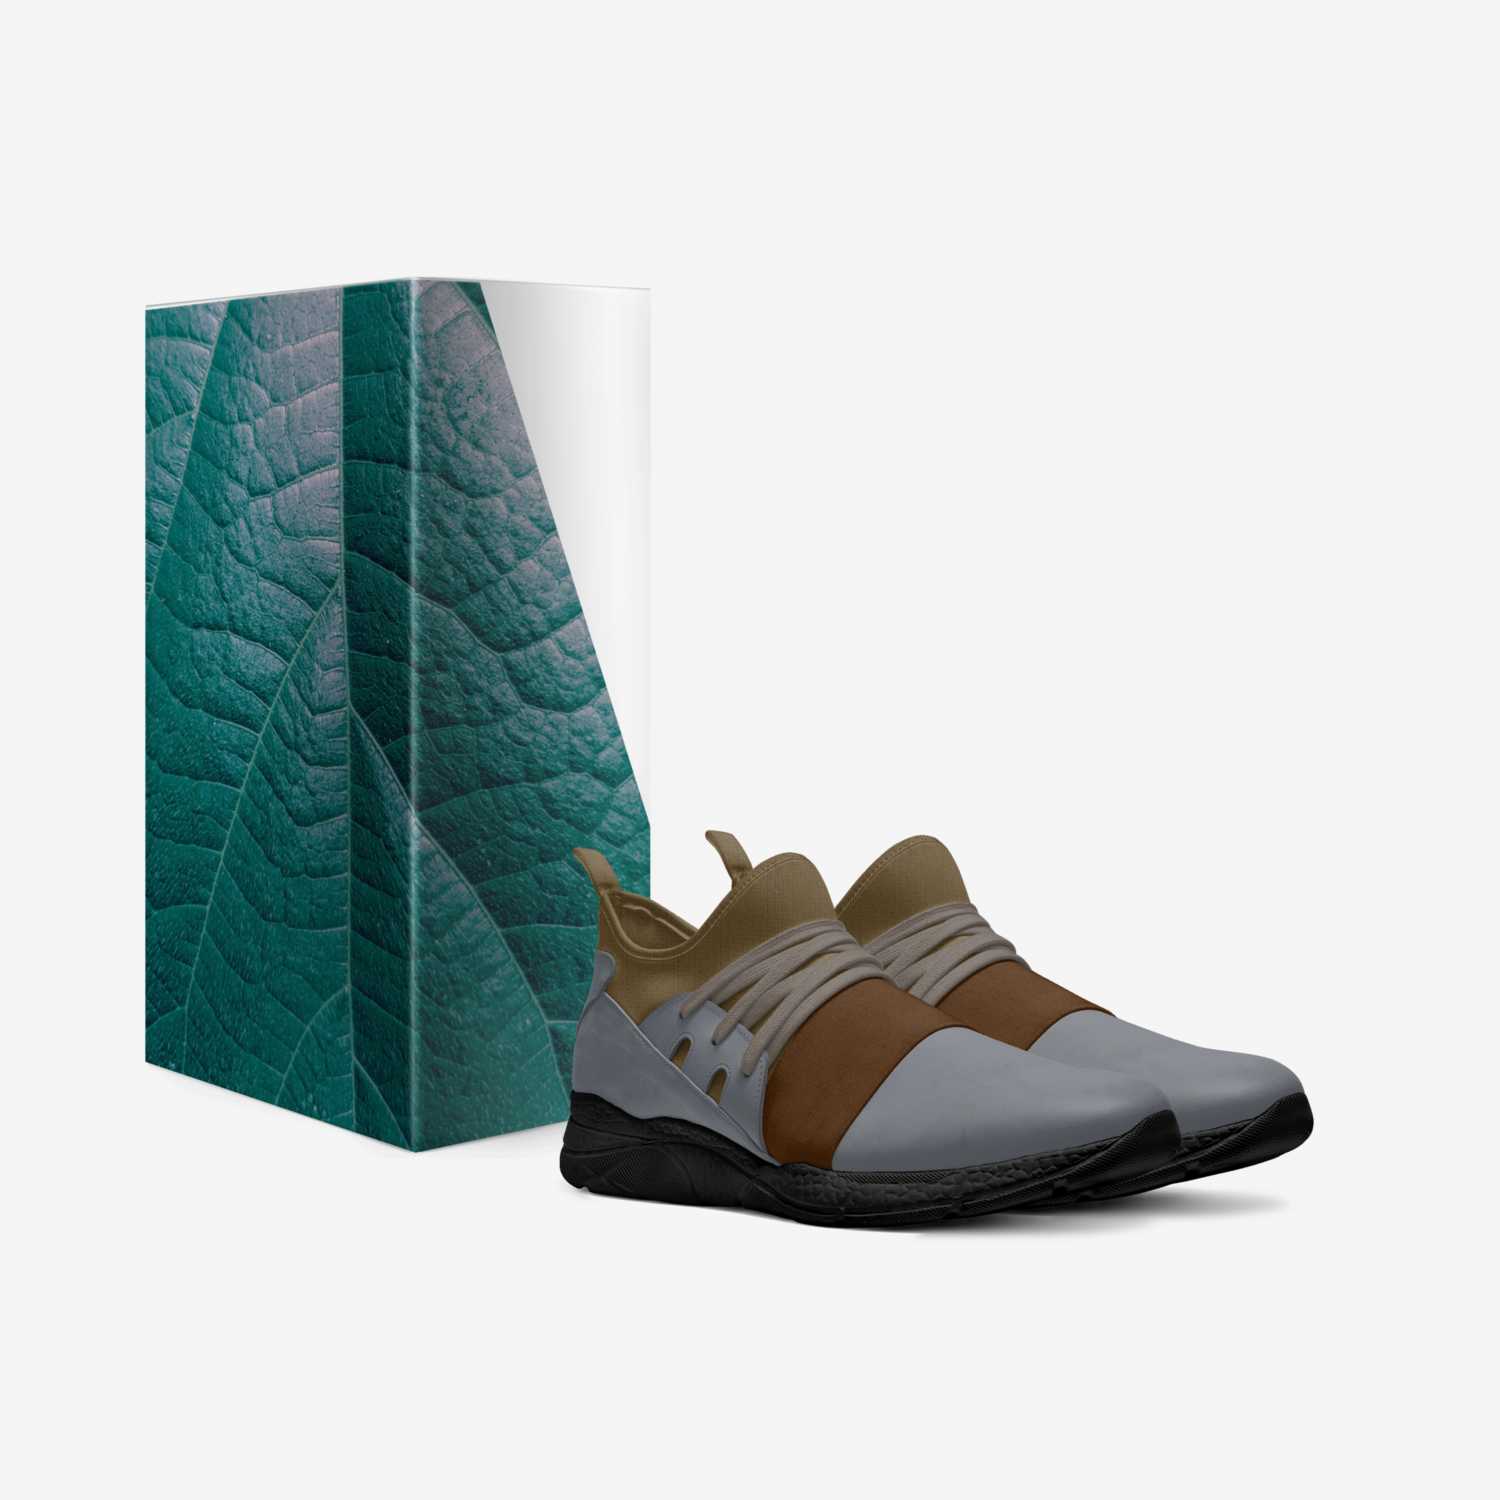 New Road-Bugs custom made in Italy shoes by Paulina Jastrzebska | Box view